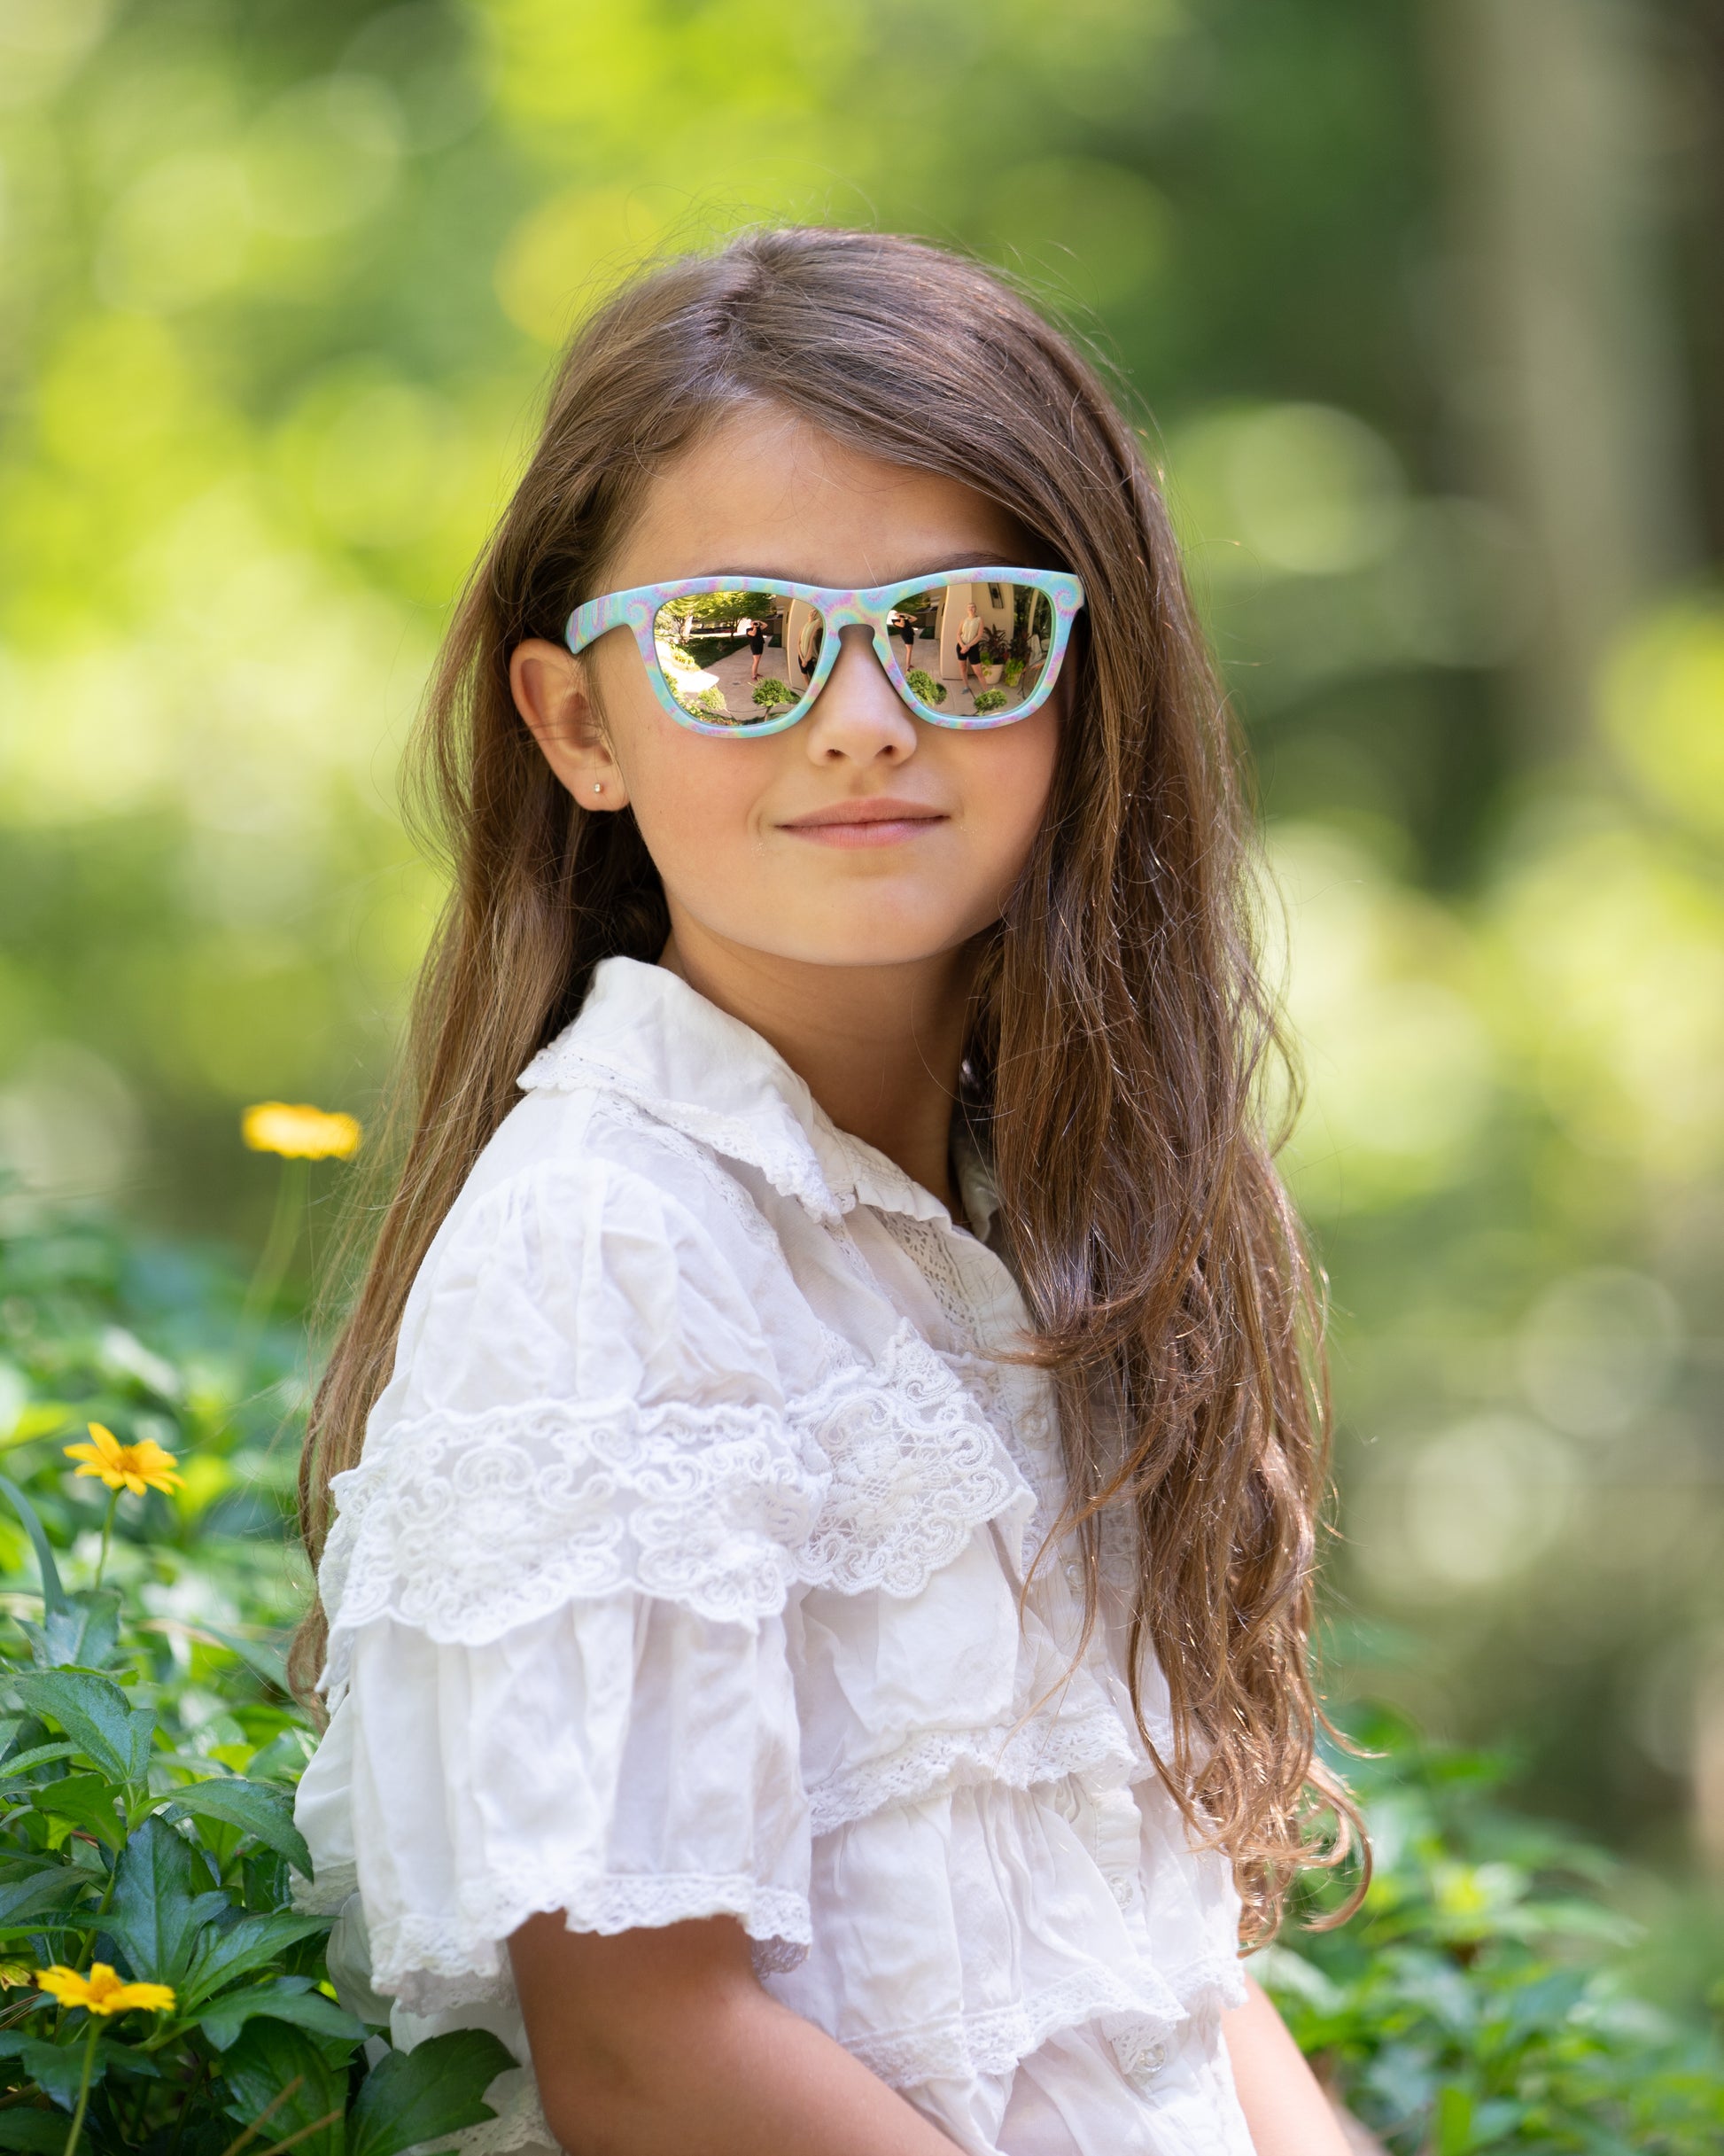 Sunnies Shades: Polarized Kids Sunglasses with 100% UVA/UVB Protection